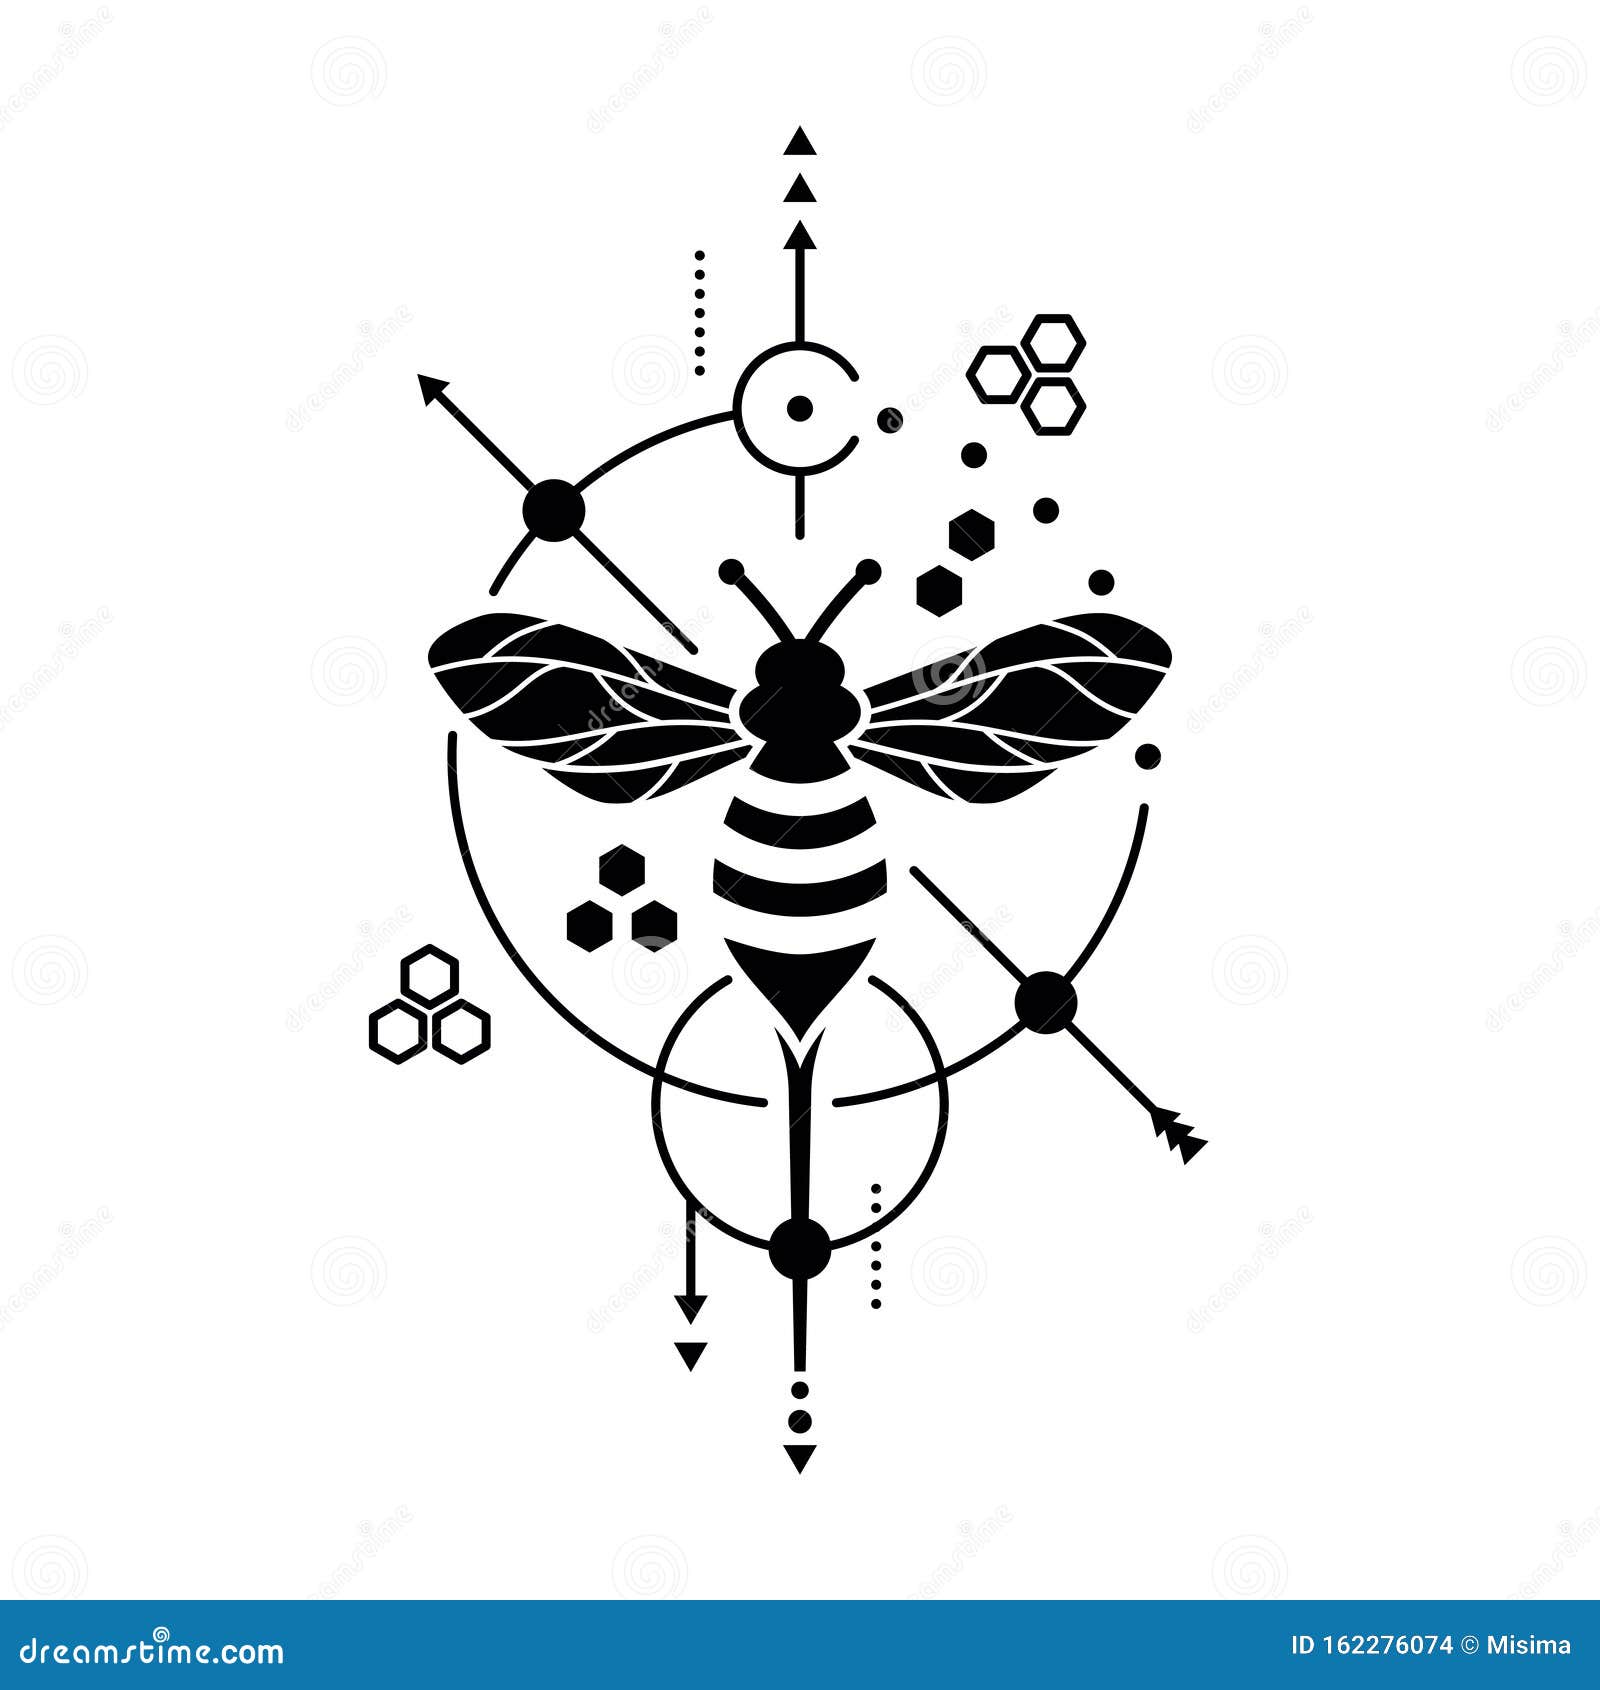 Bees and Honeycomb Tattoo Idea